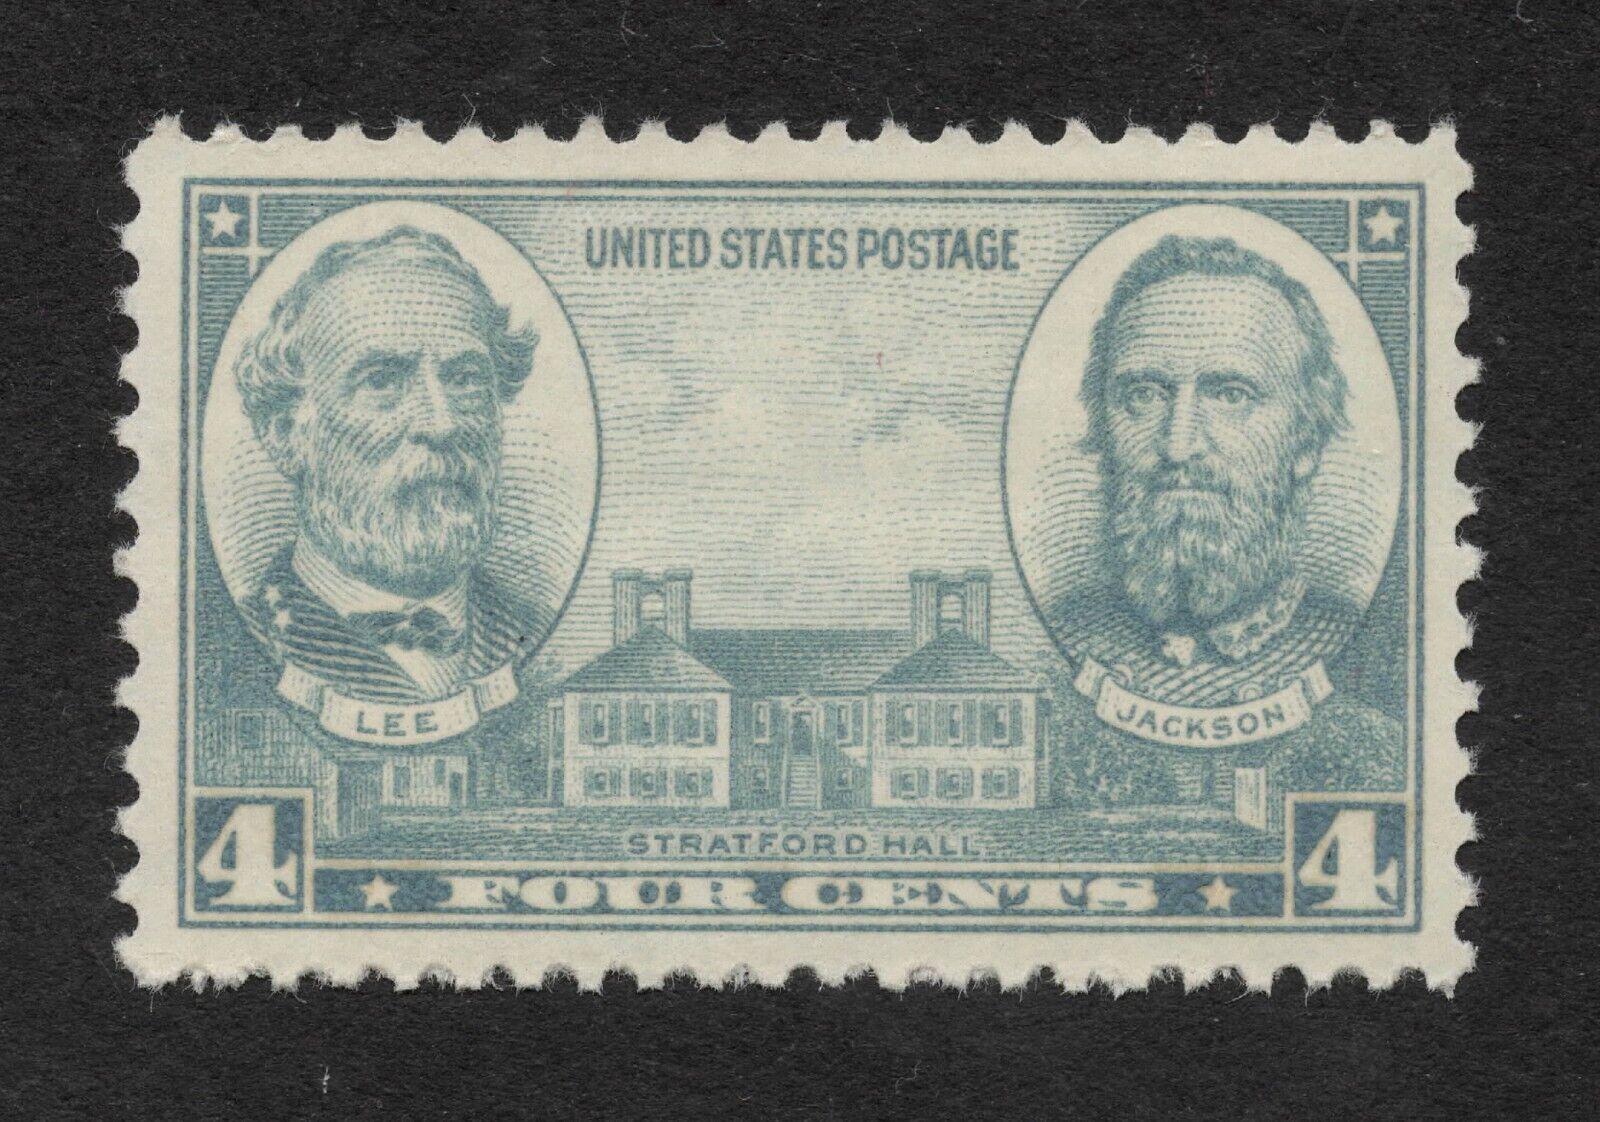 Civil War Generals - Robert E. Lee - Stonewall Jackson - mint condition US stamp